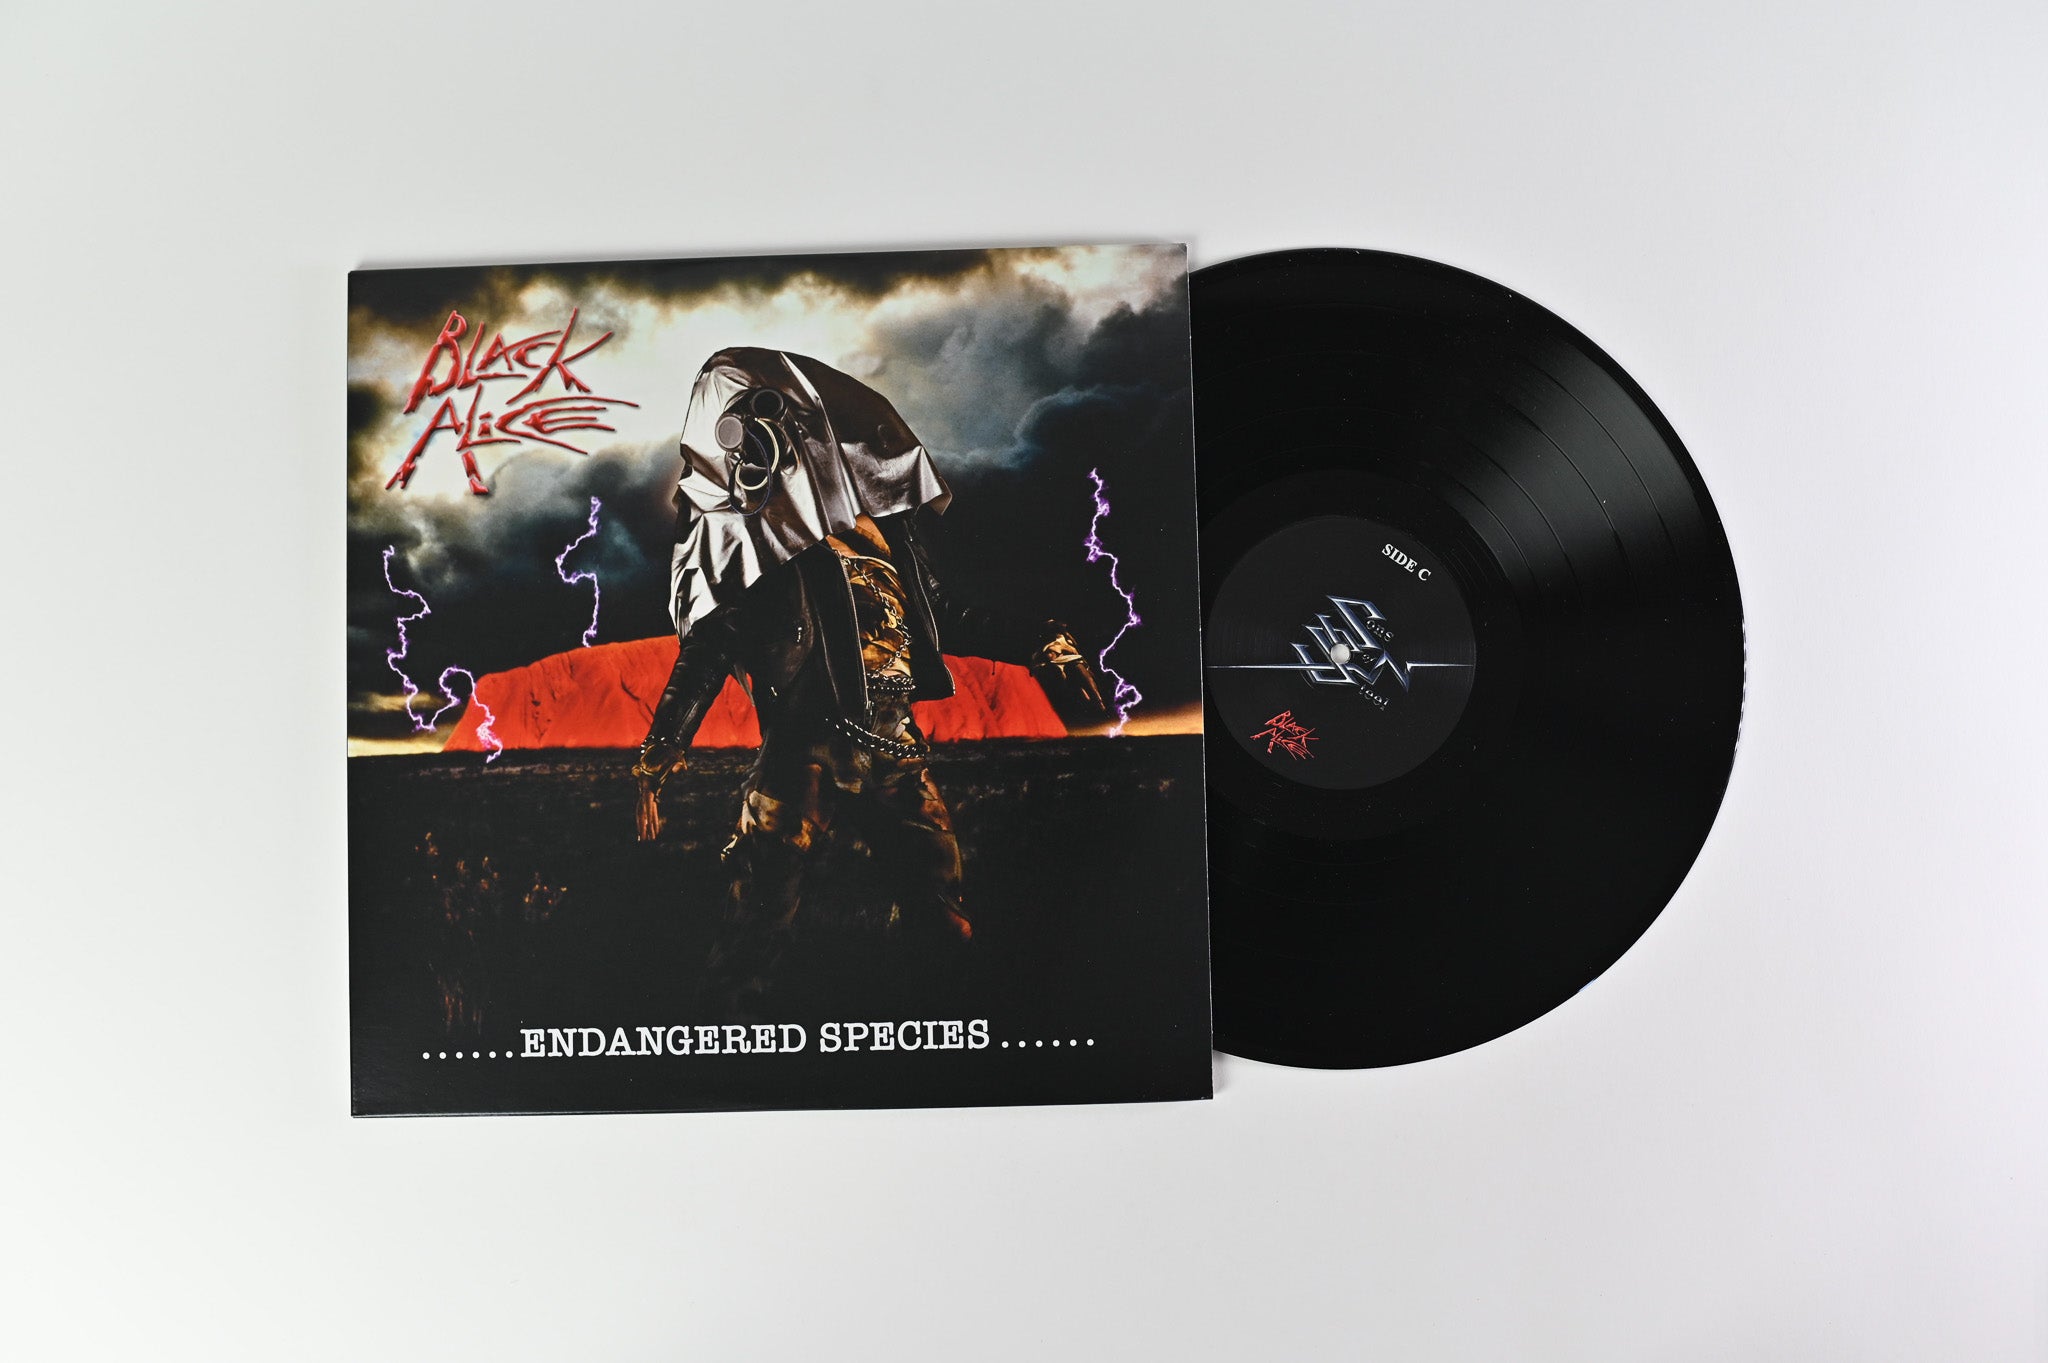 Black Alice - Endangered Species / Sons Of Steel on Karthago Records